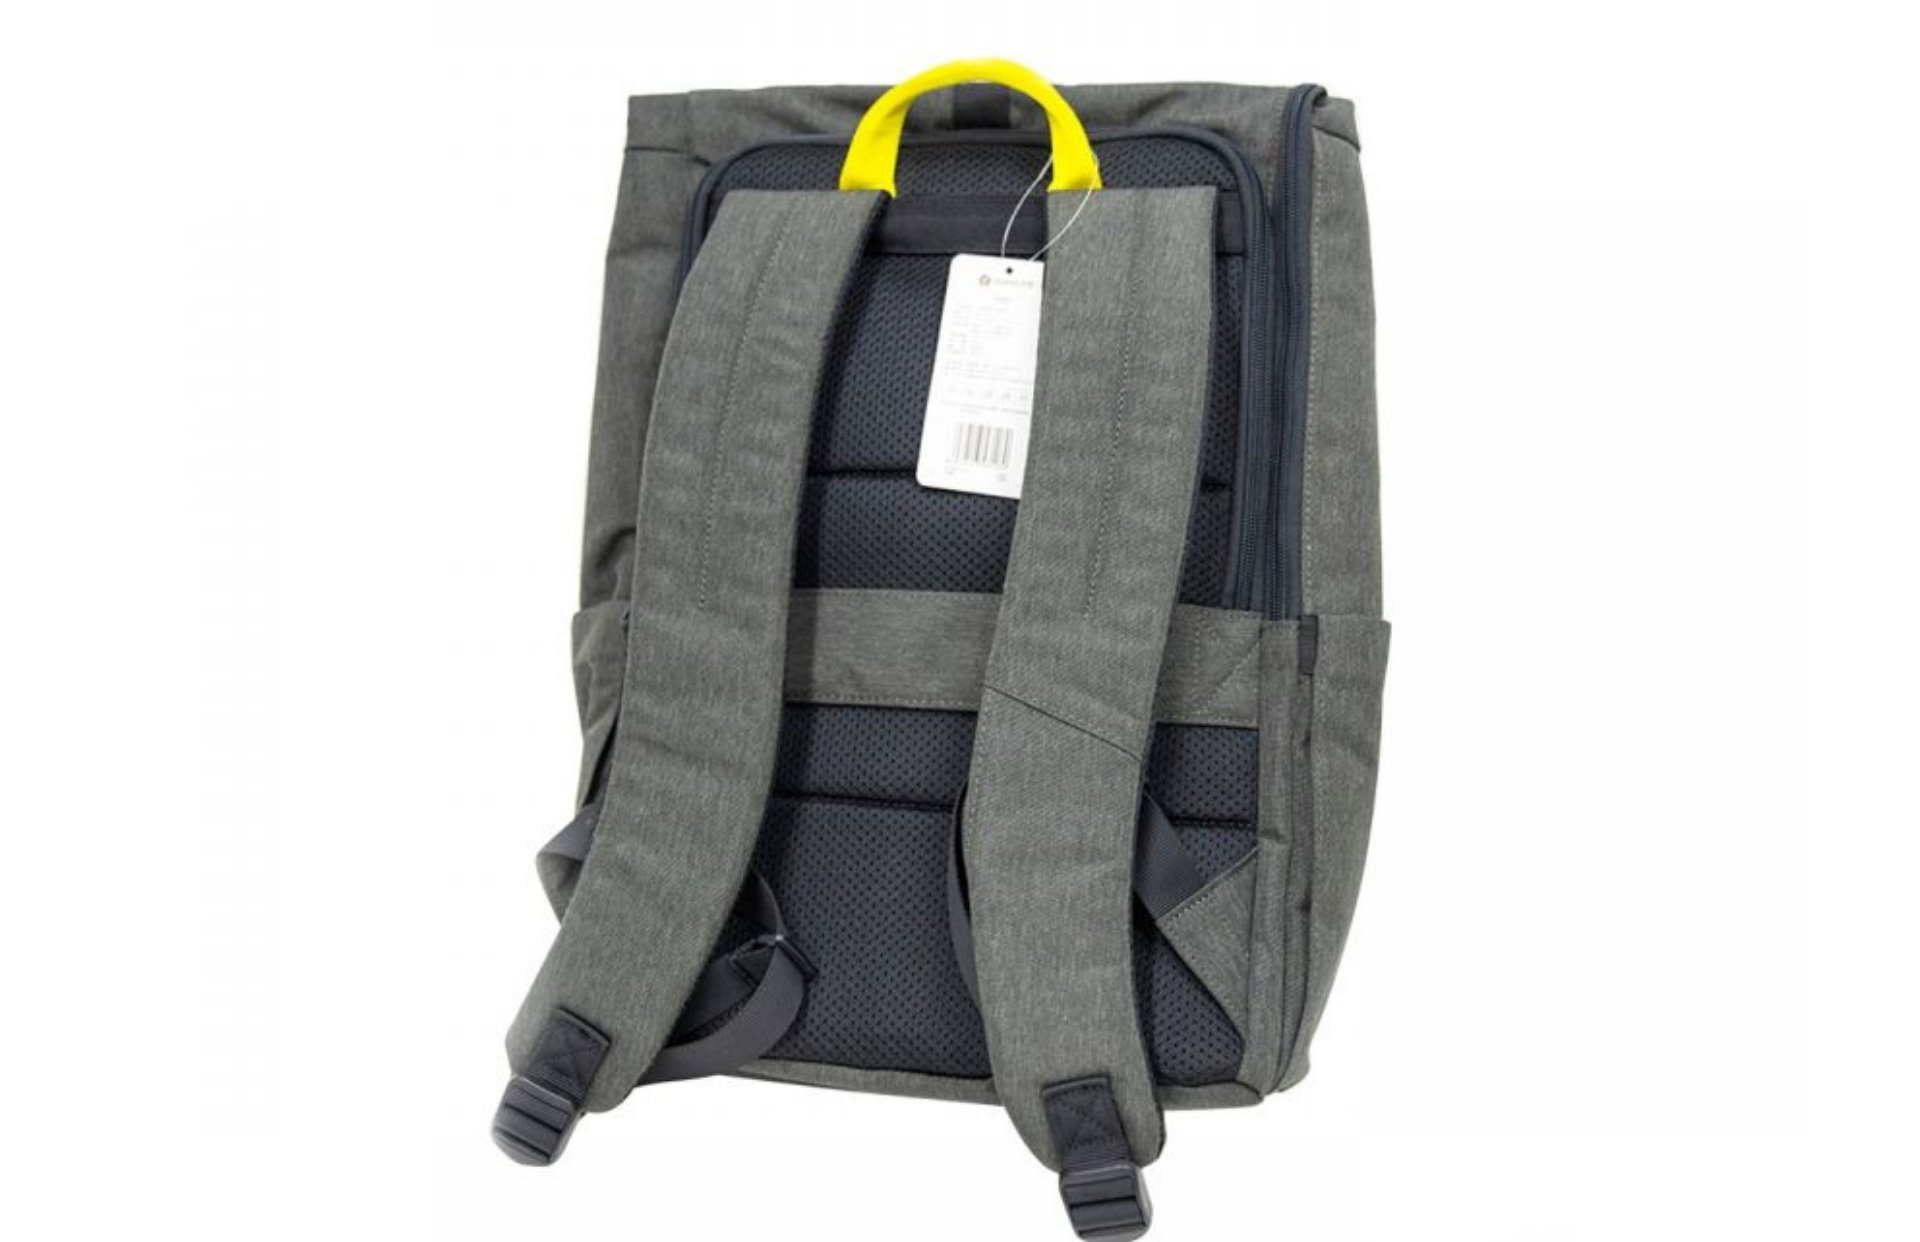 Ninebot Leisure Backpack